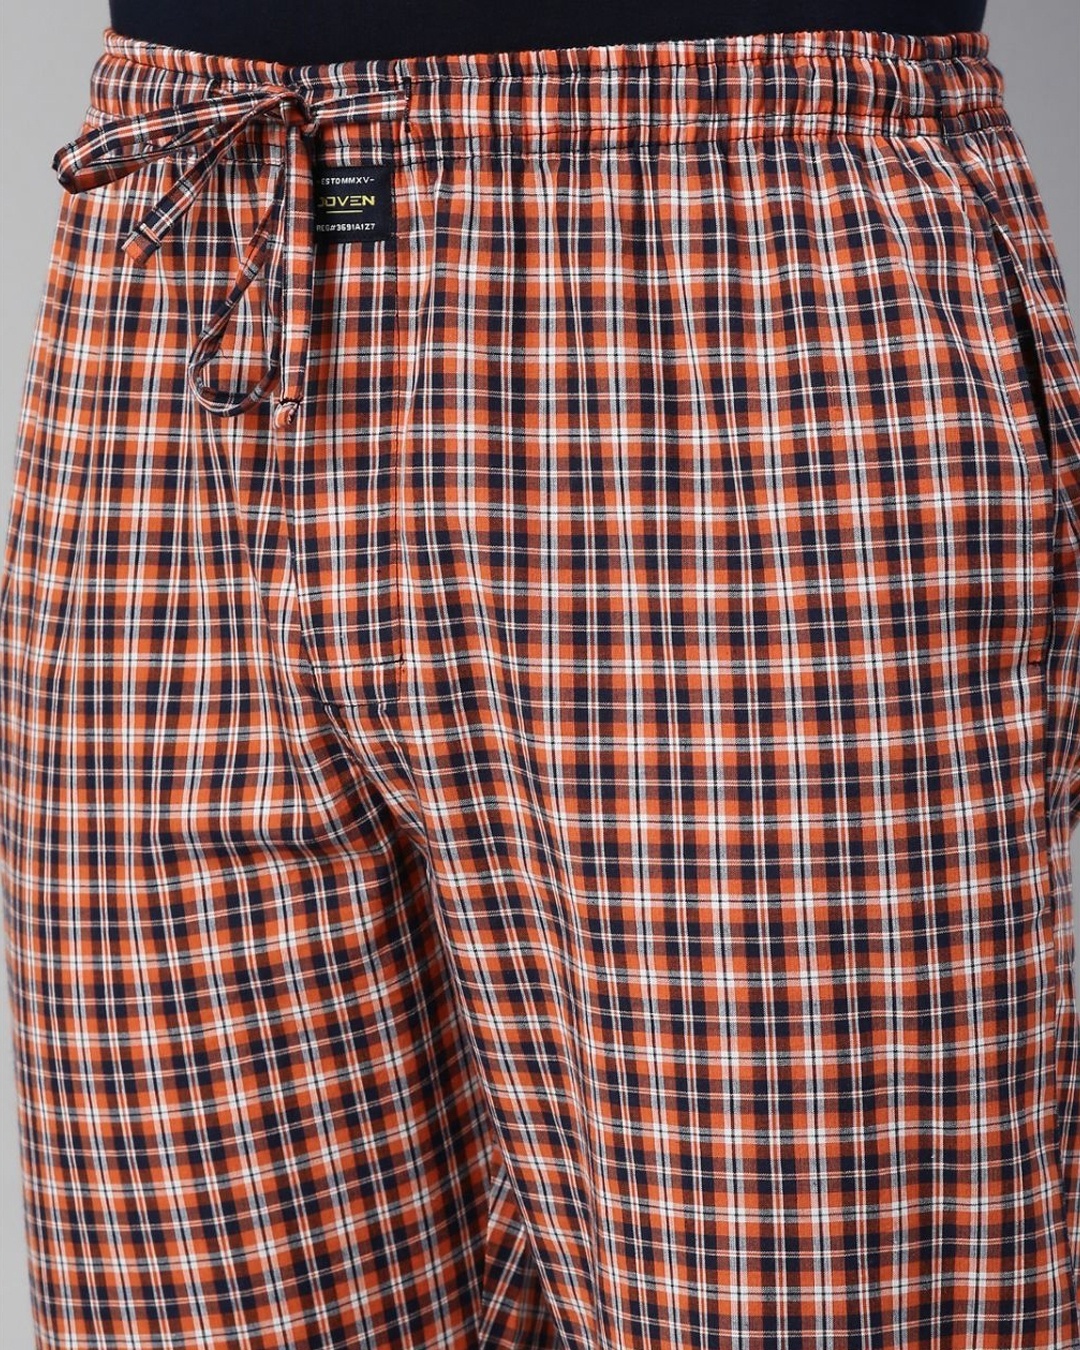 Shop Men's Orange & Blue Checked Cotton Pyjamas